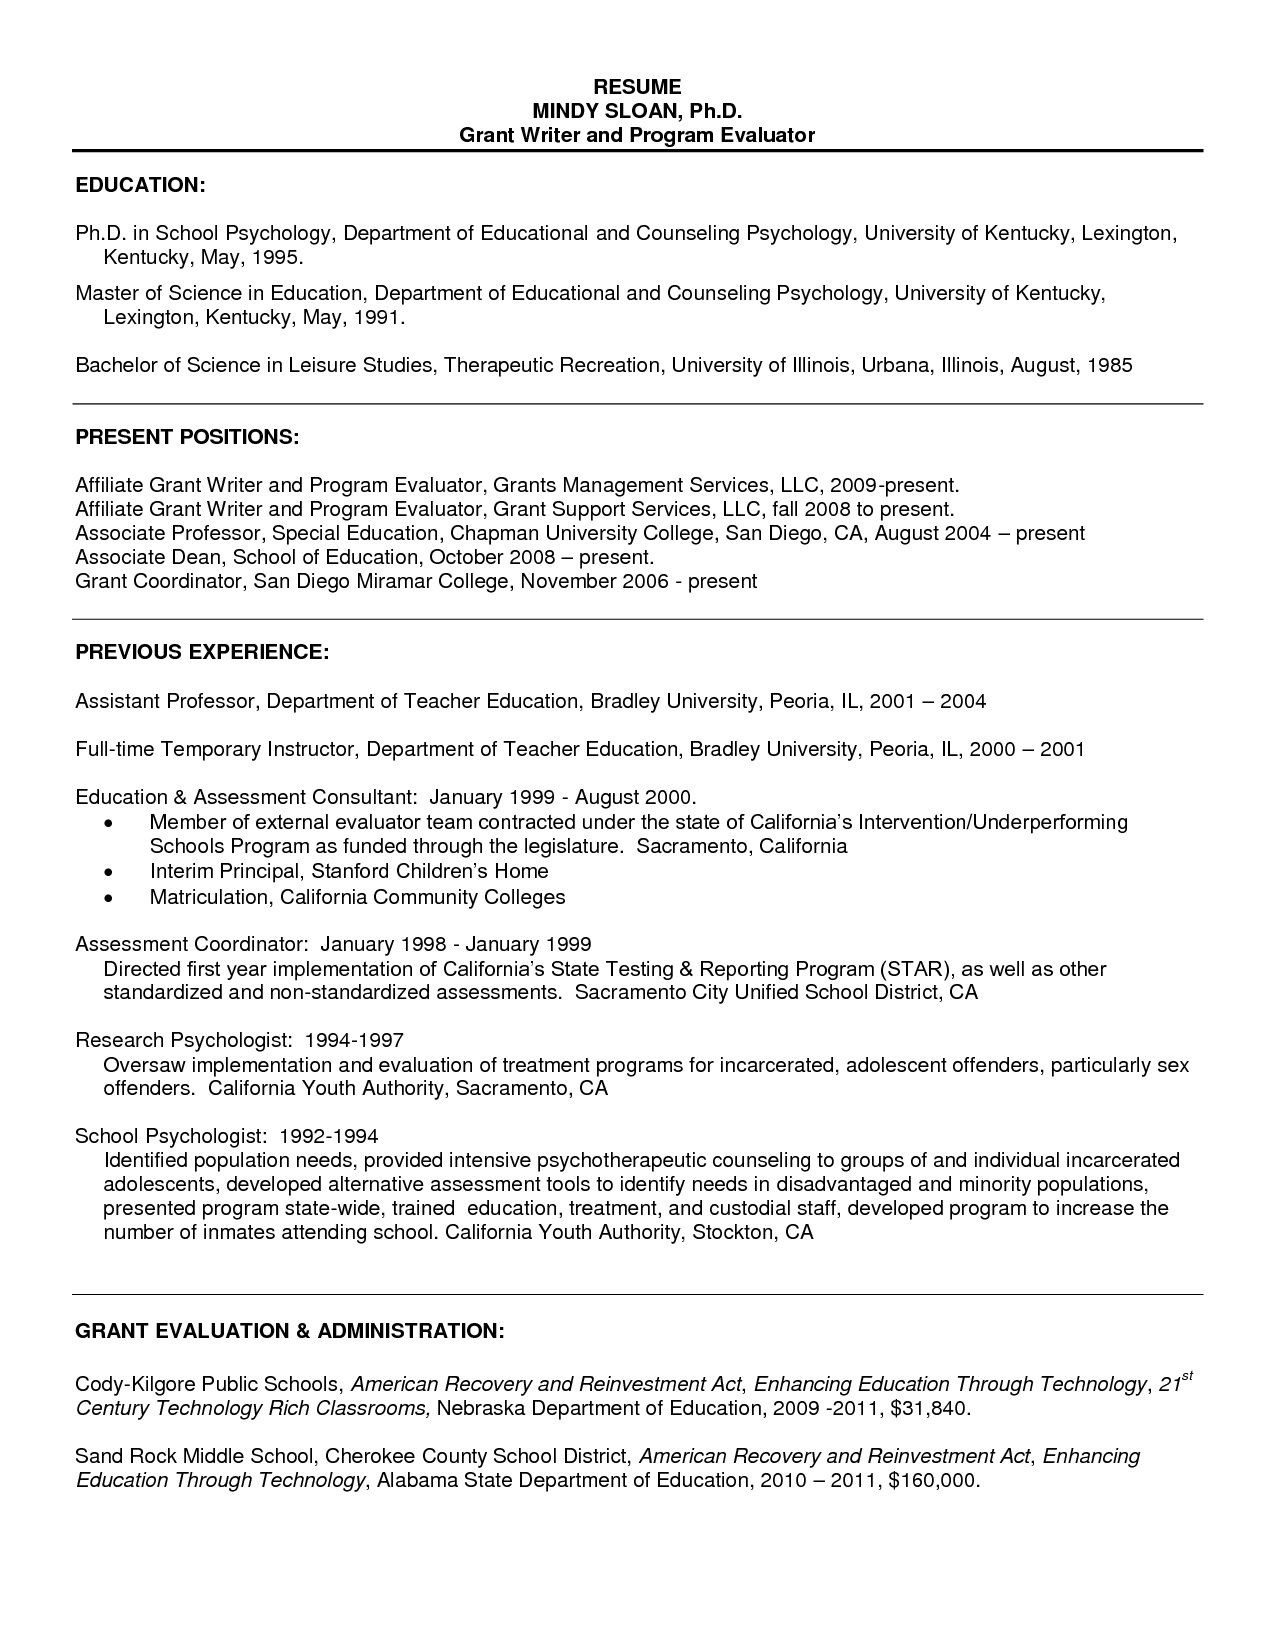 Sample Resume Graduate School Application Psychology Resume Sample for Psychology Graduate Free Resume Templates …